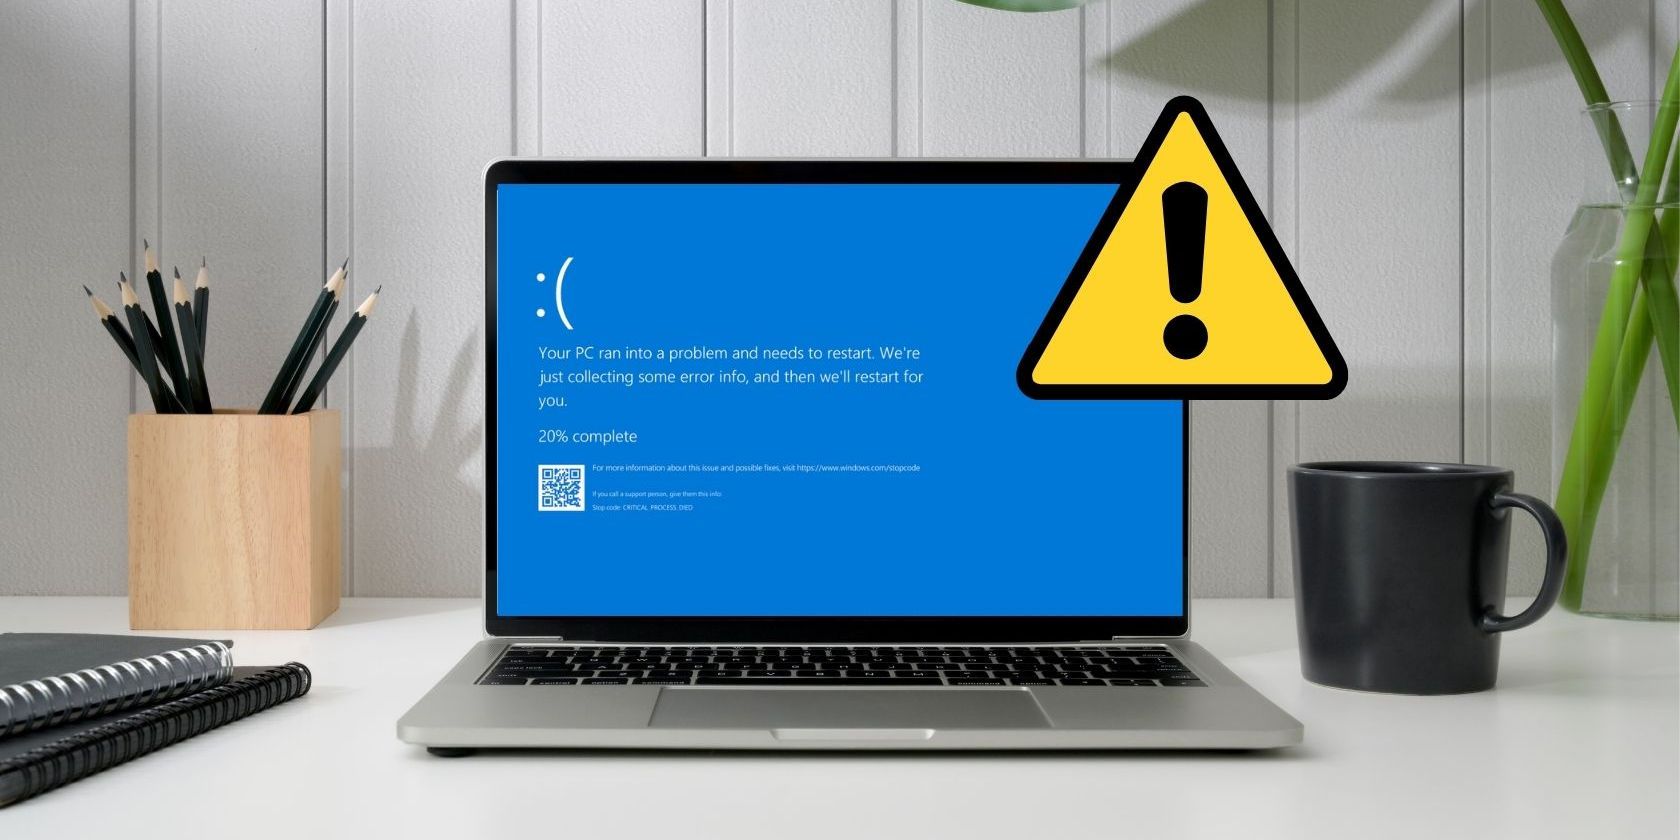 BSOD error on a Windows laptop